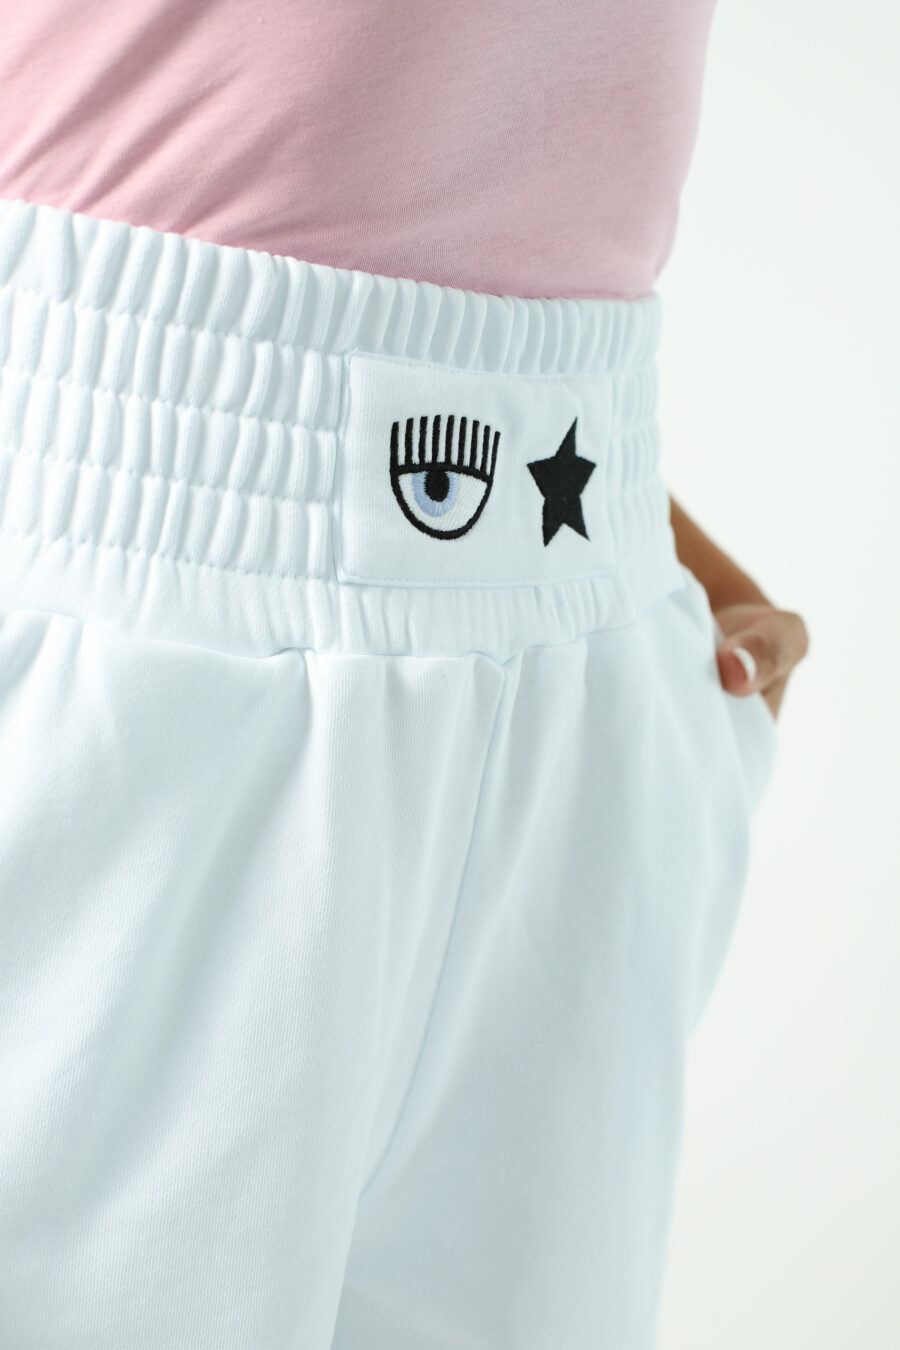 Pantalón de chándal blanco corto con logo ojo y estrella - Photos 2703